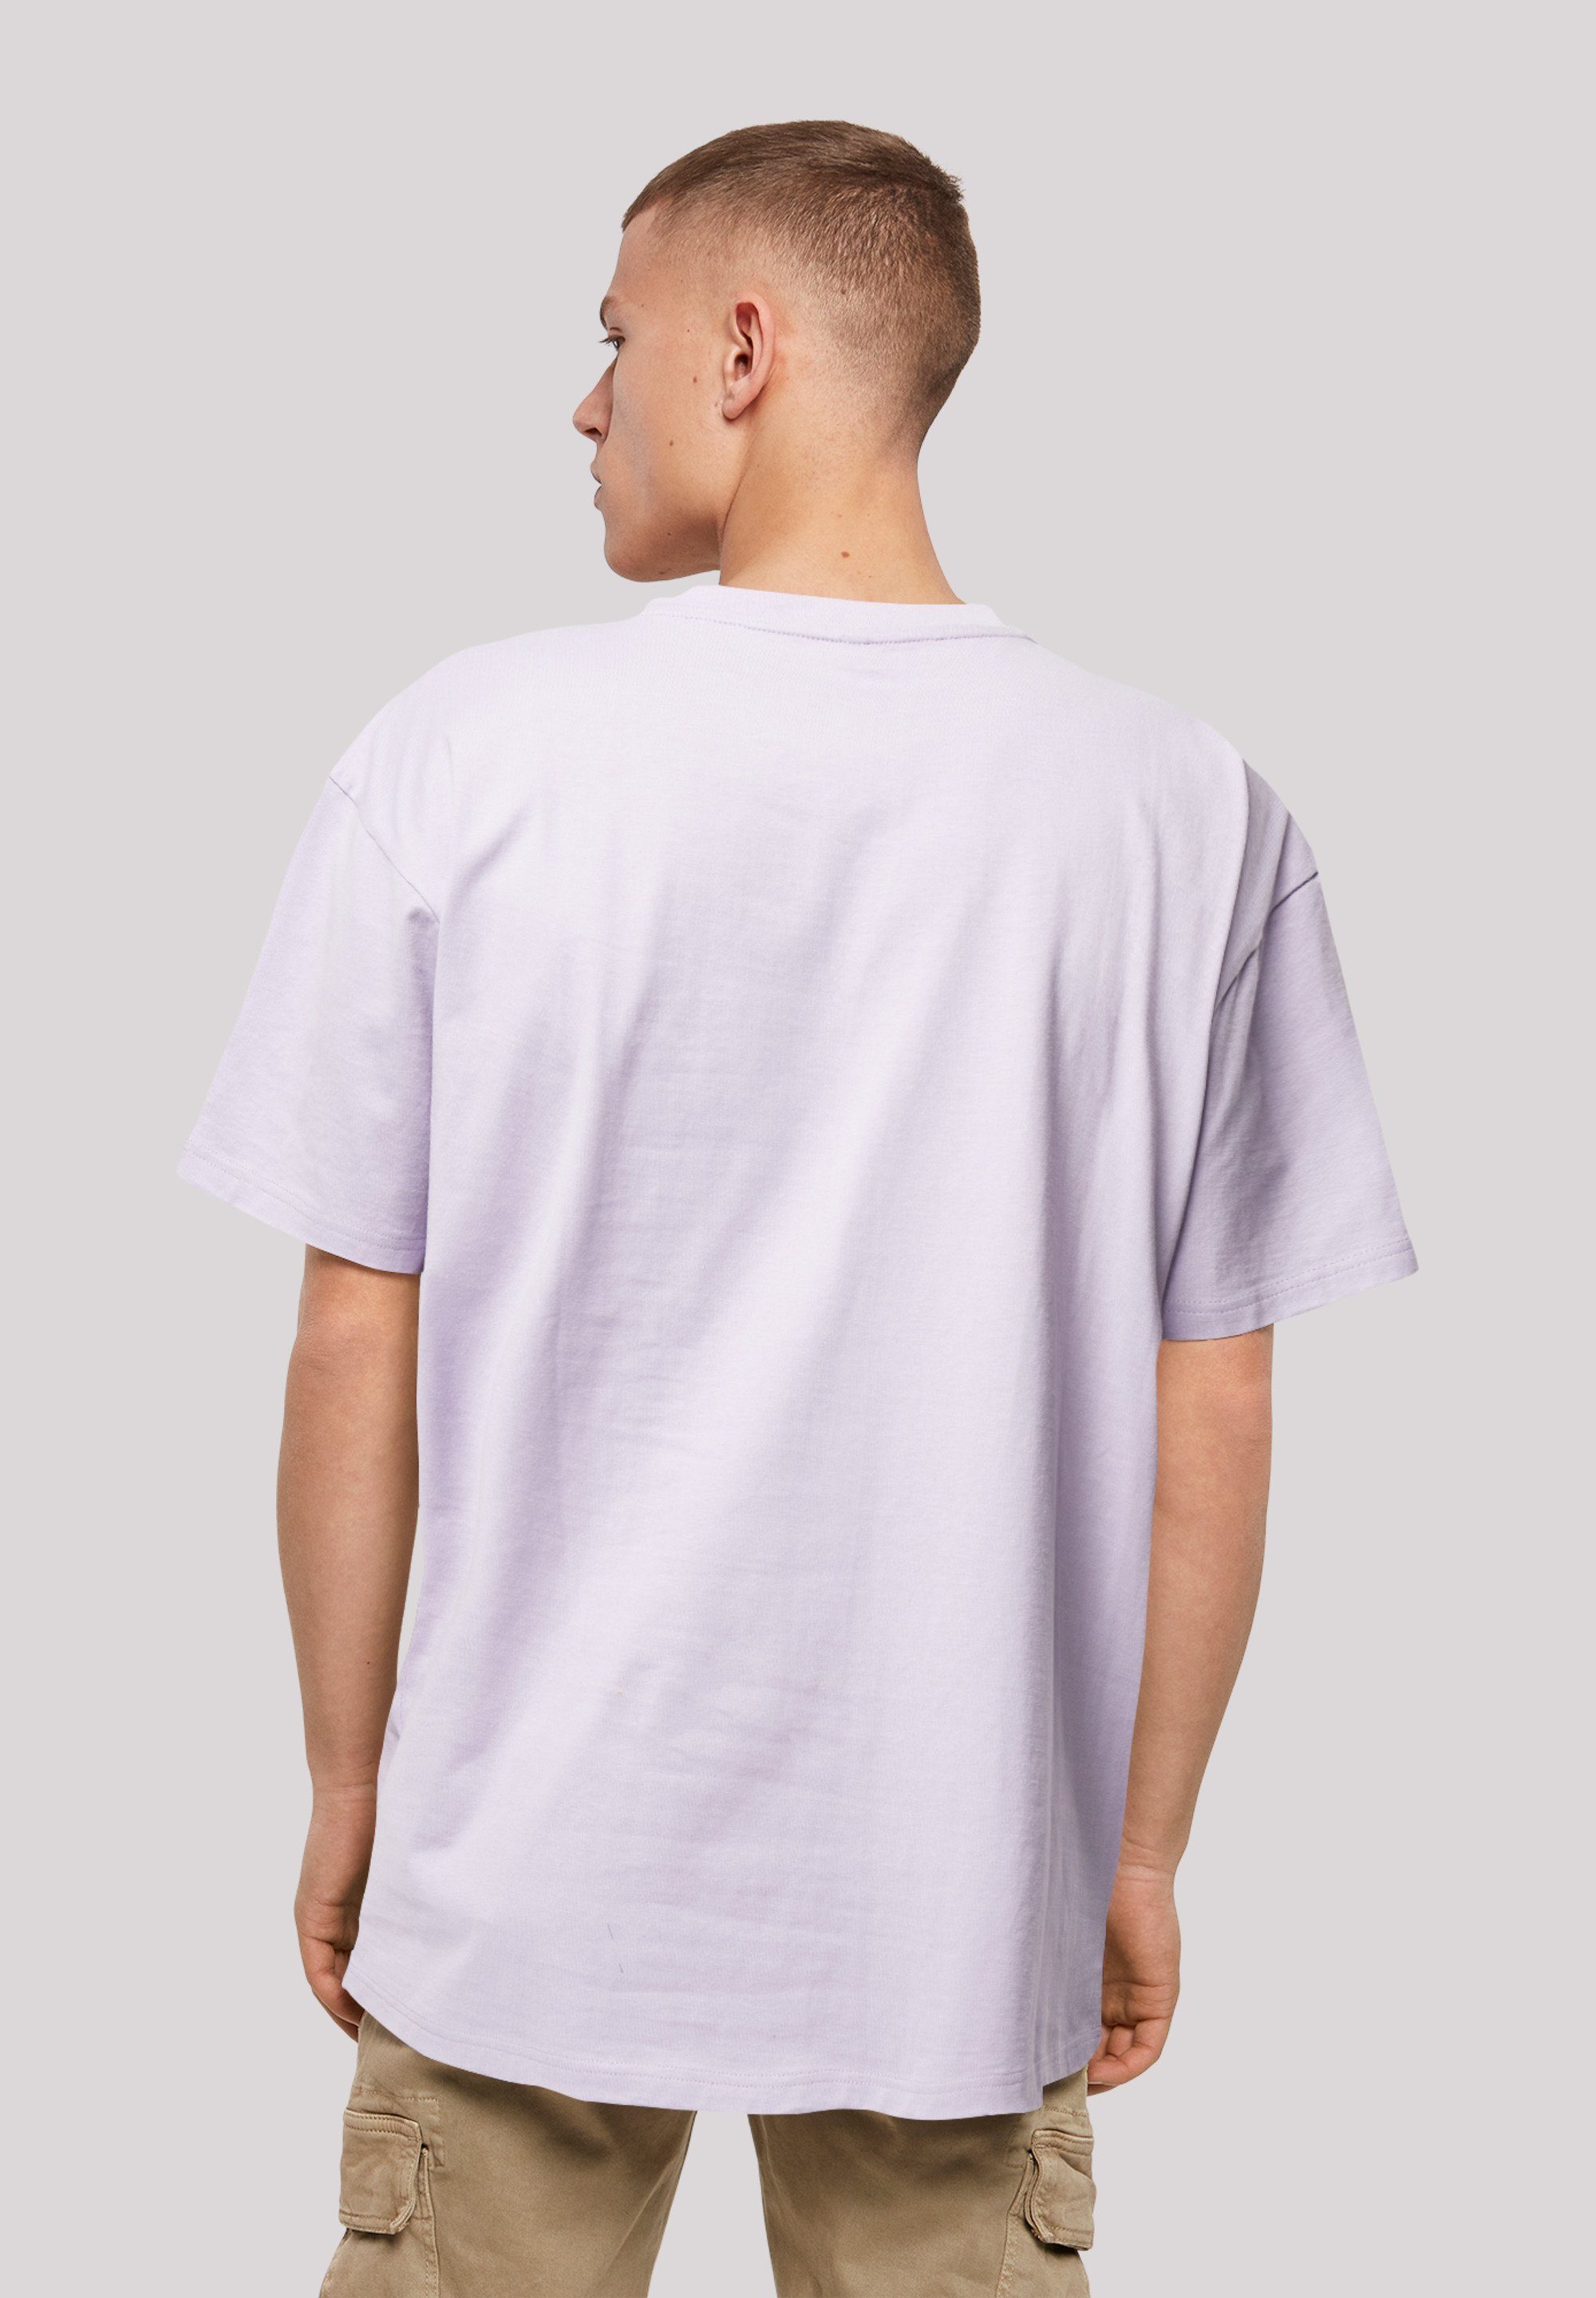 F4NT4STIC T-Shirt CYBERPUNK Bone Print Cyber STYLES lilac